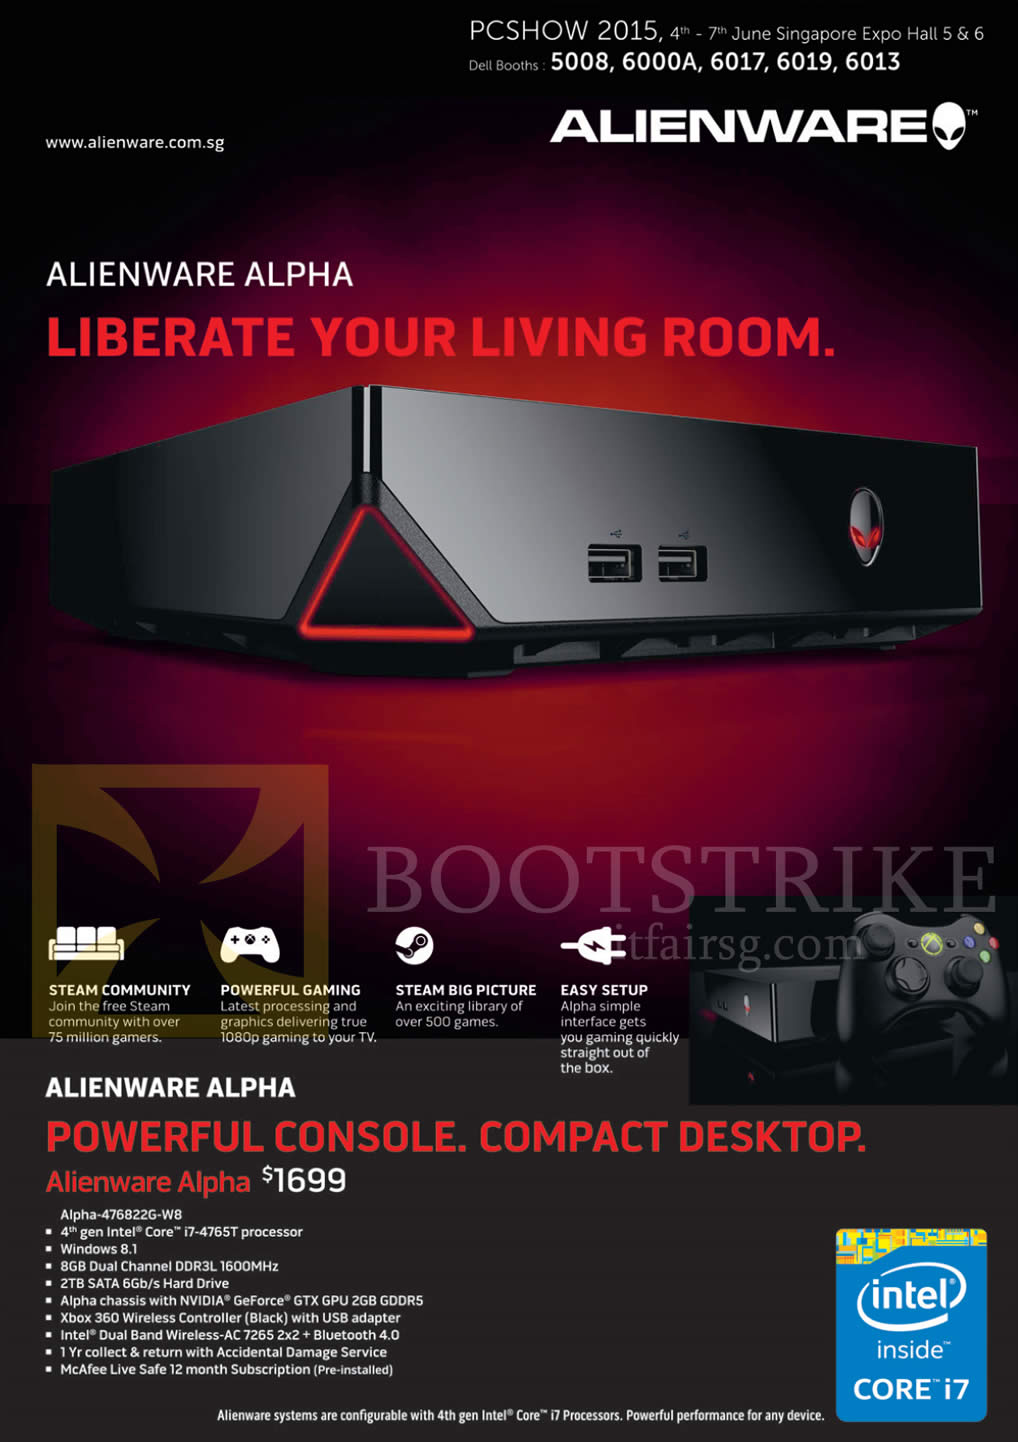 PC SHOW 2015 price list image brochure of Dell Desktop PC Alienware Alpha